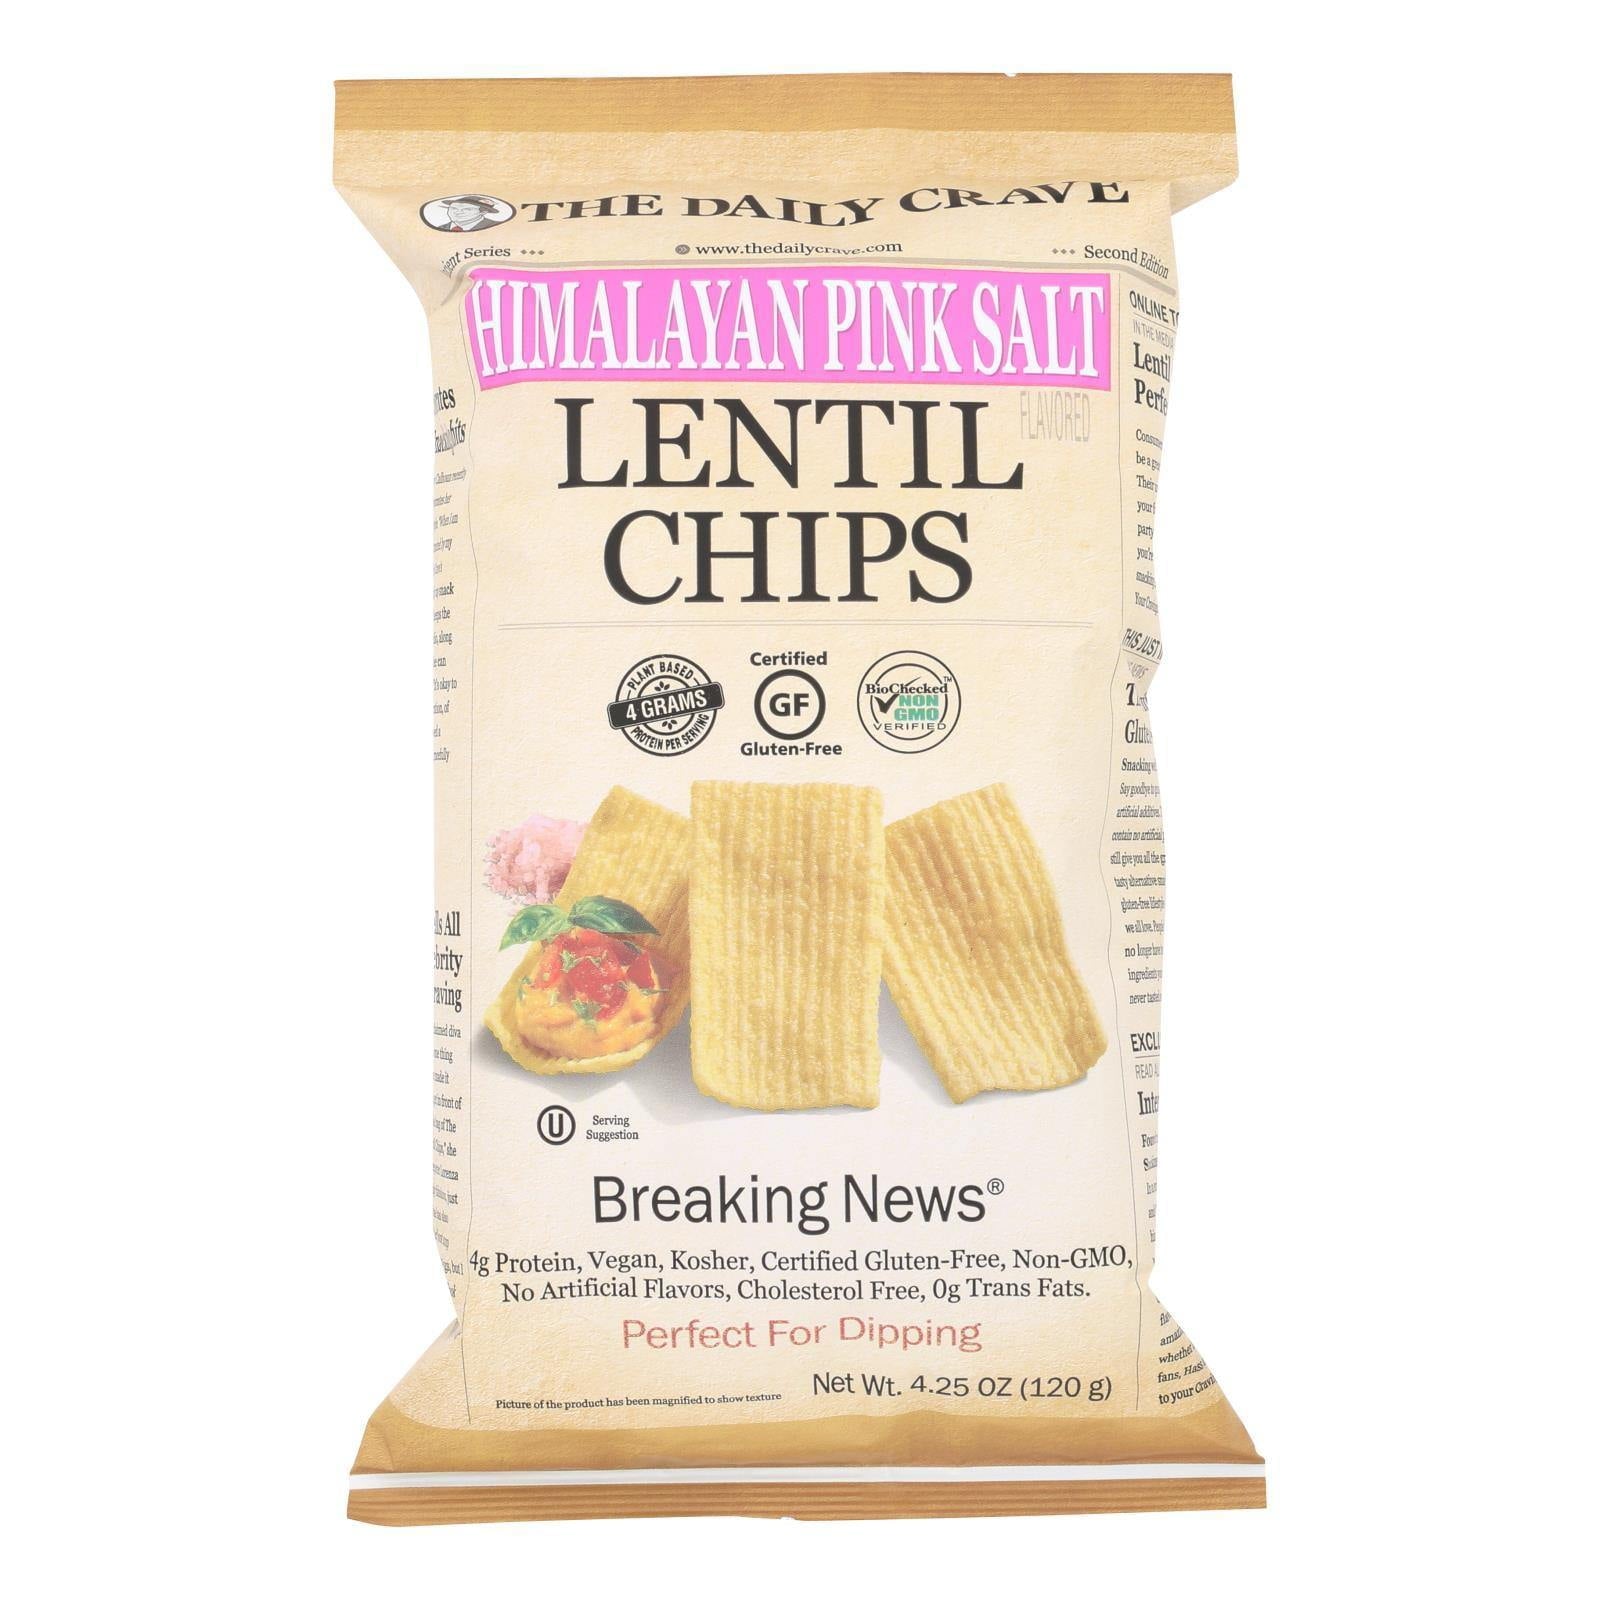 The Daily Crave Lentil Chips Himalayan Pink Salt 4.25 Oz